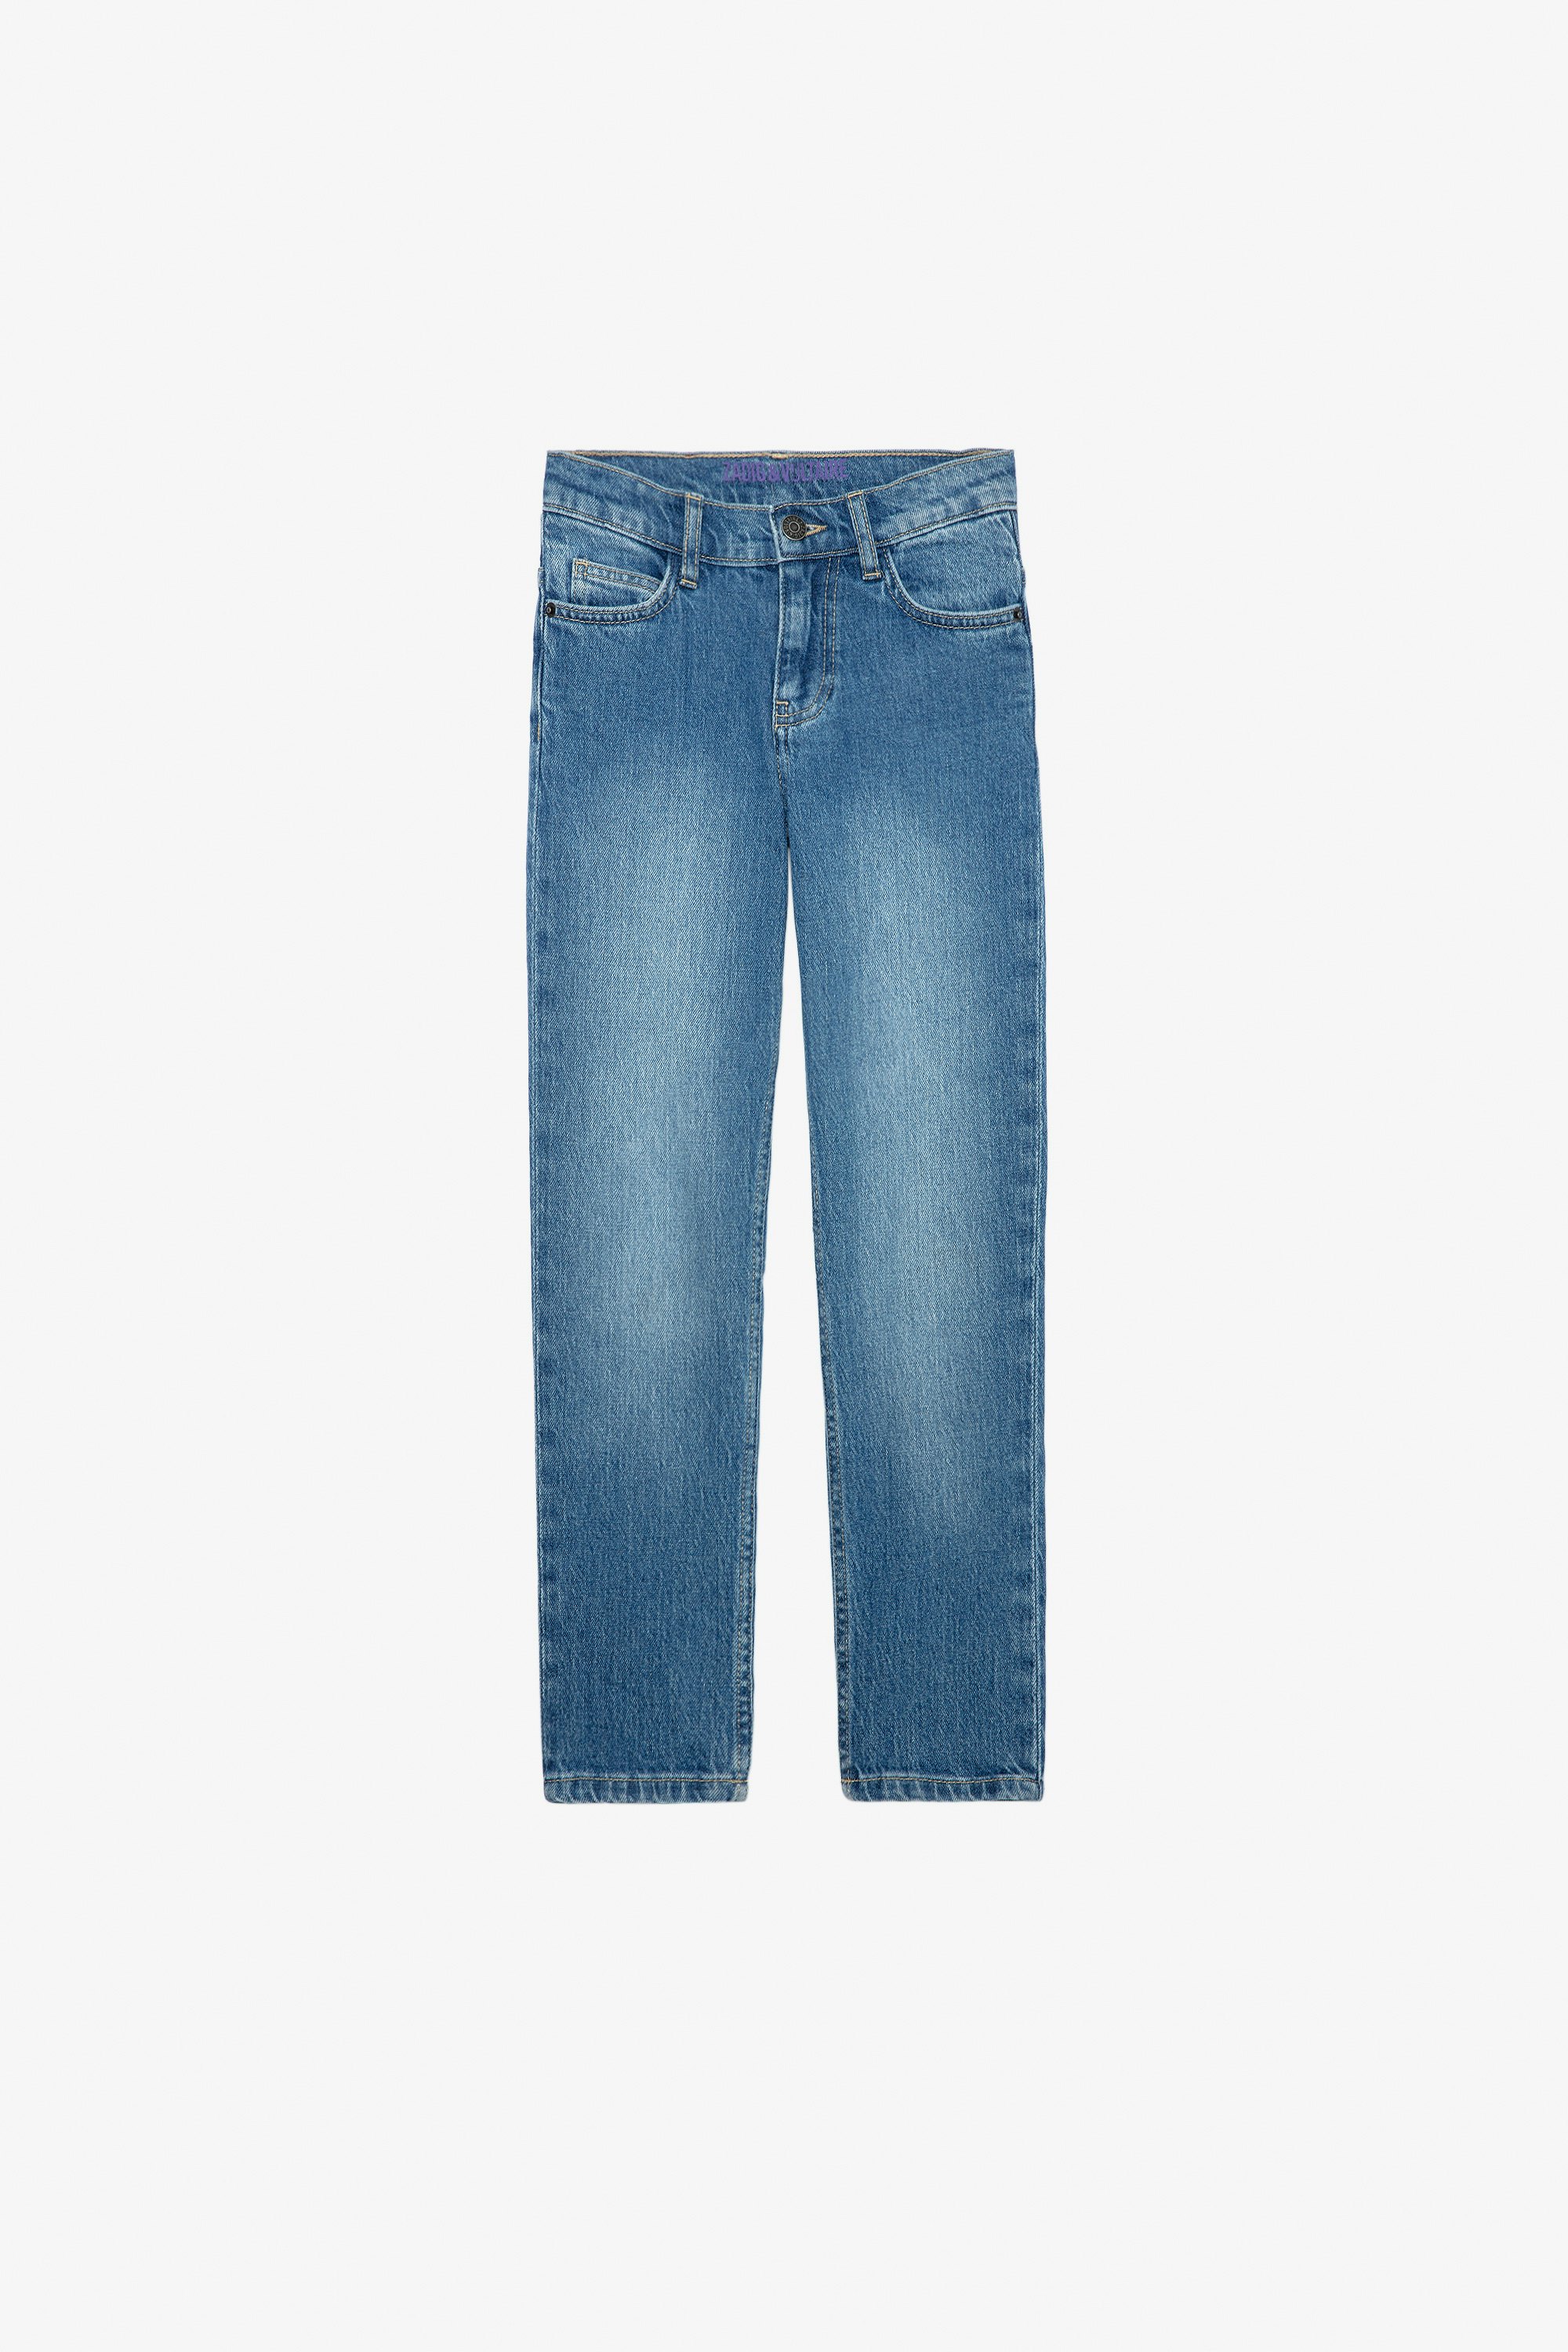 Boys’ Sean Jeans - Boys’ straight leg faded blue denim jeans.